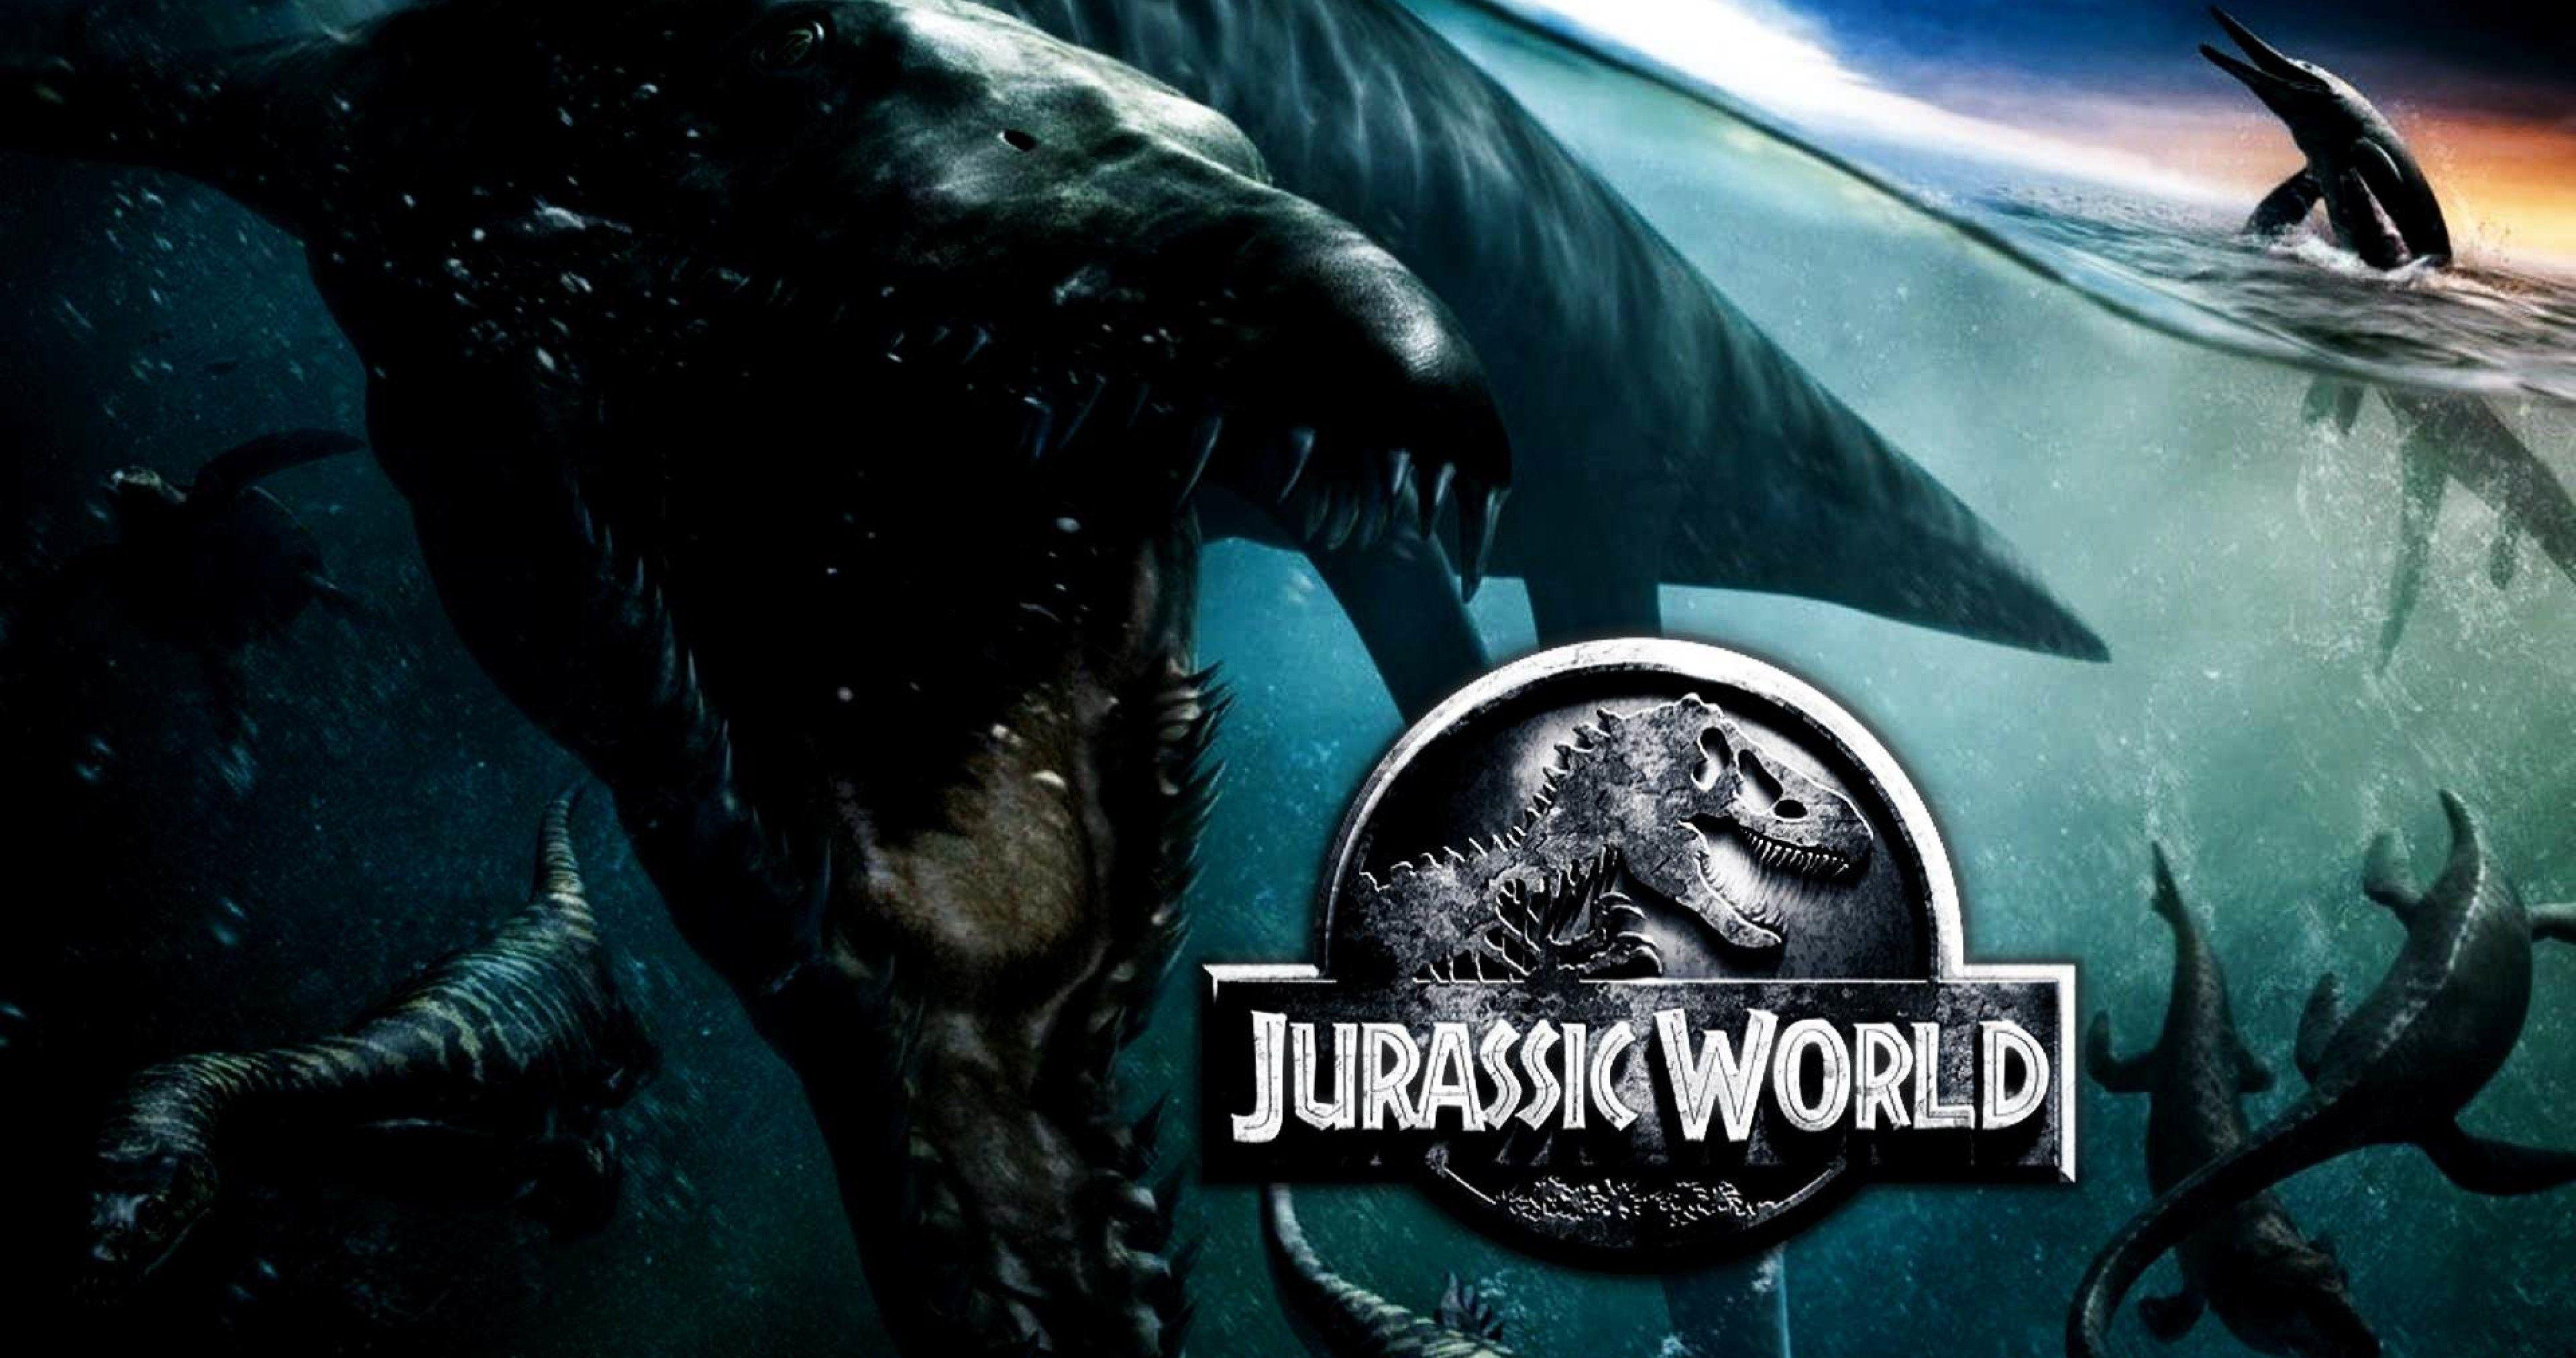 jurassic world 4k ultra HD wallpaper. Jurassic world movie